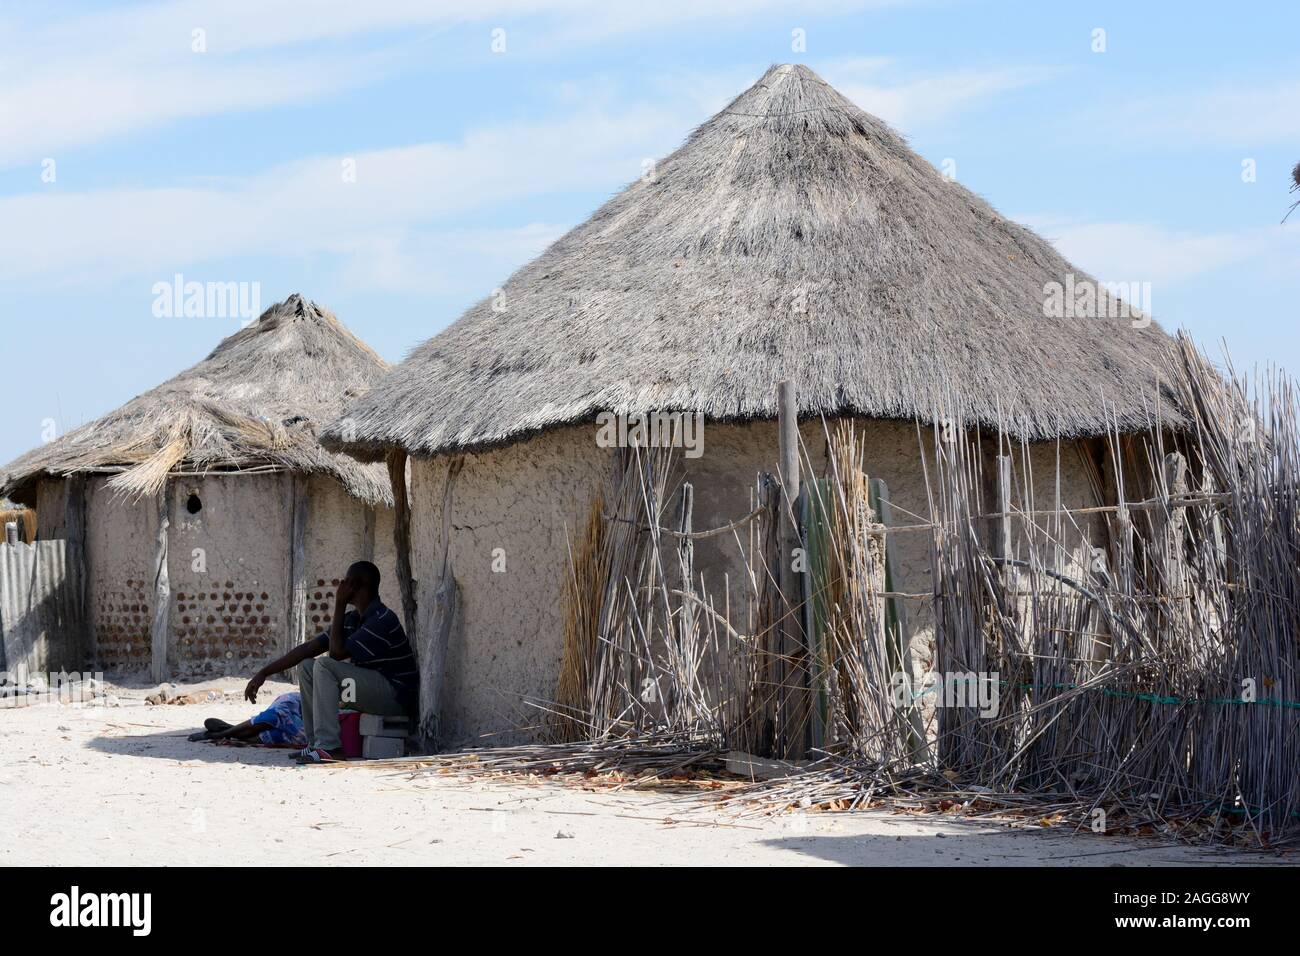 Small traditional Botswanan village huts Moremi National Park Botswana Africa Stock Photo